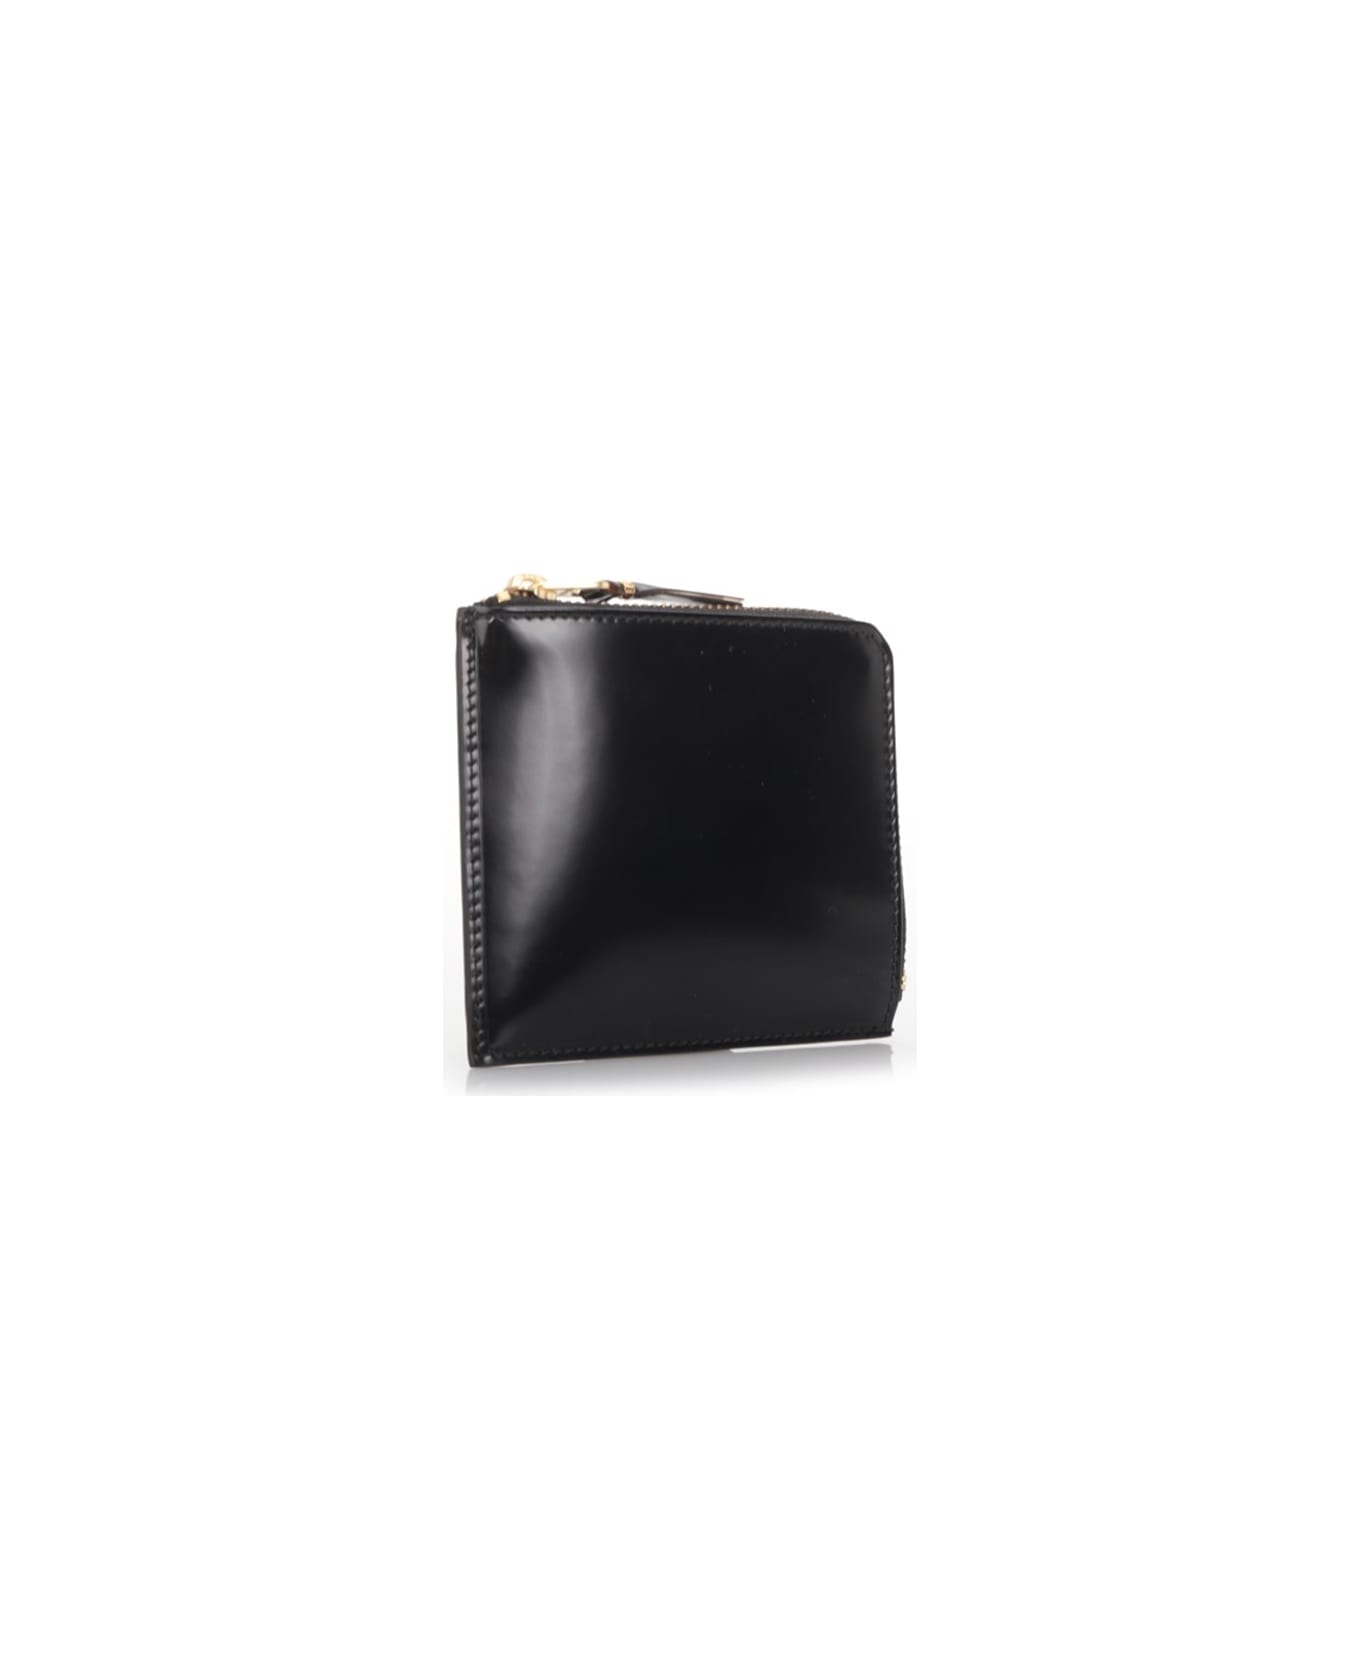 Comme des Garçons Wallet Black Wallet With Gold Colored Inside 財布